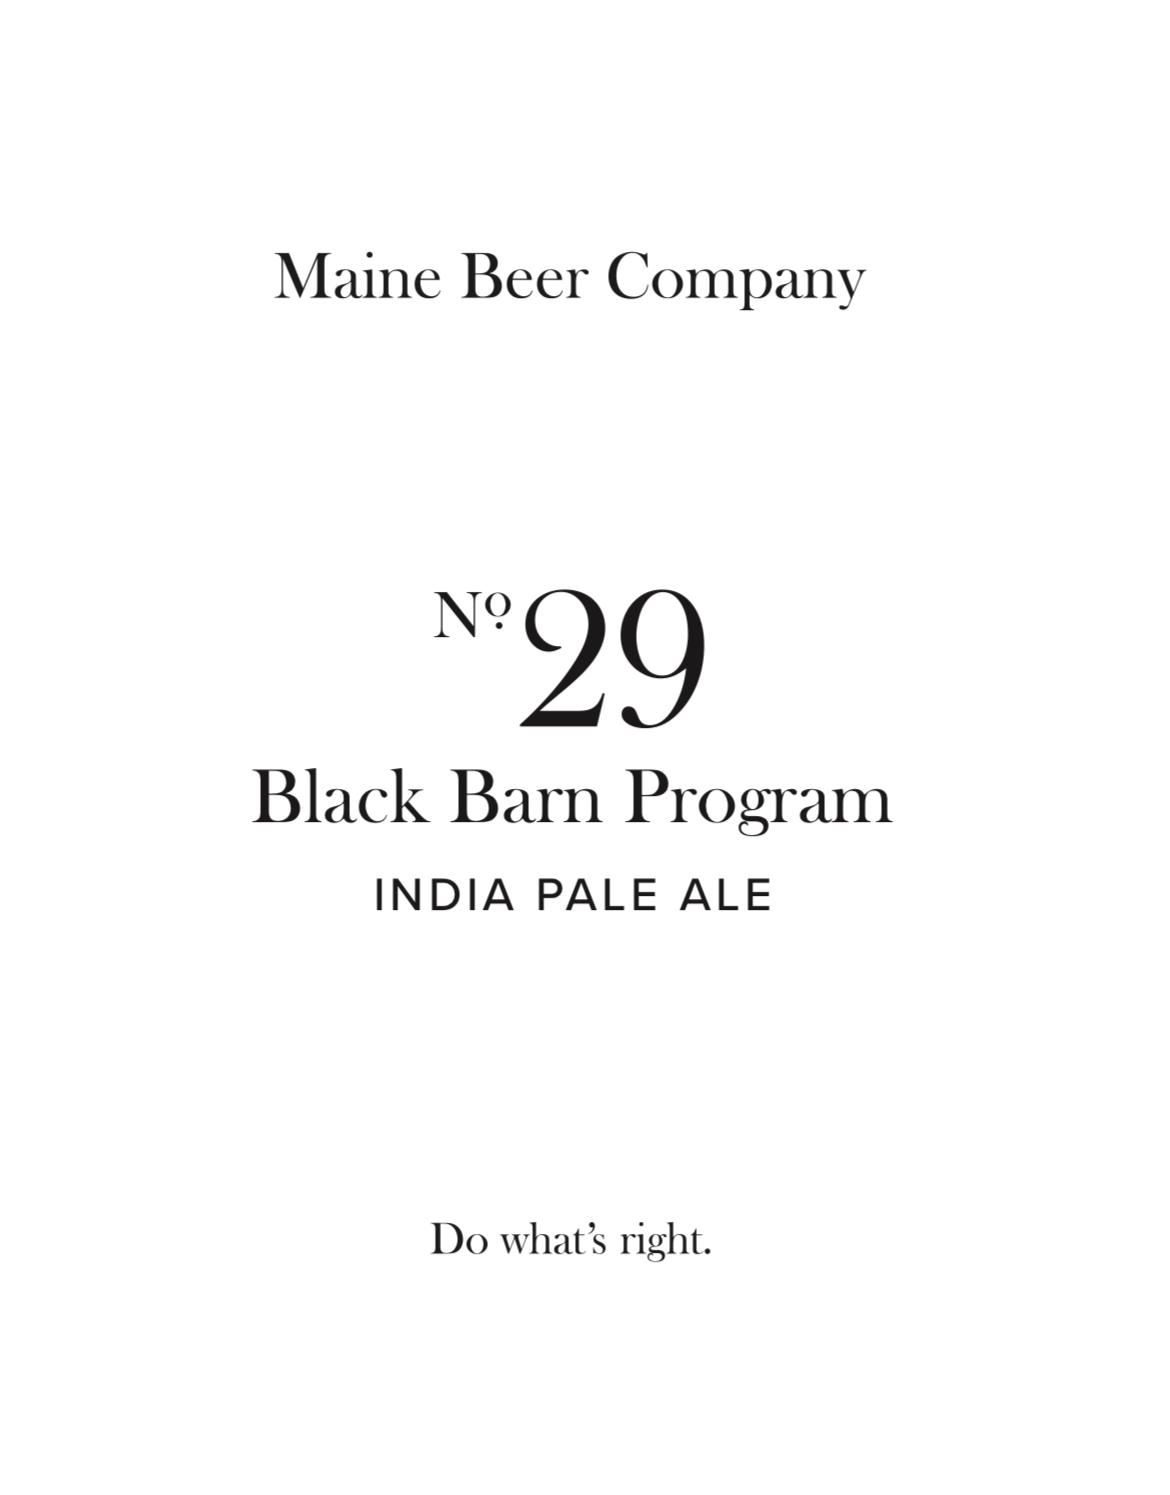 Black Barn Program No. 29 IPA